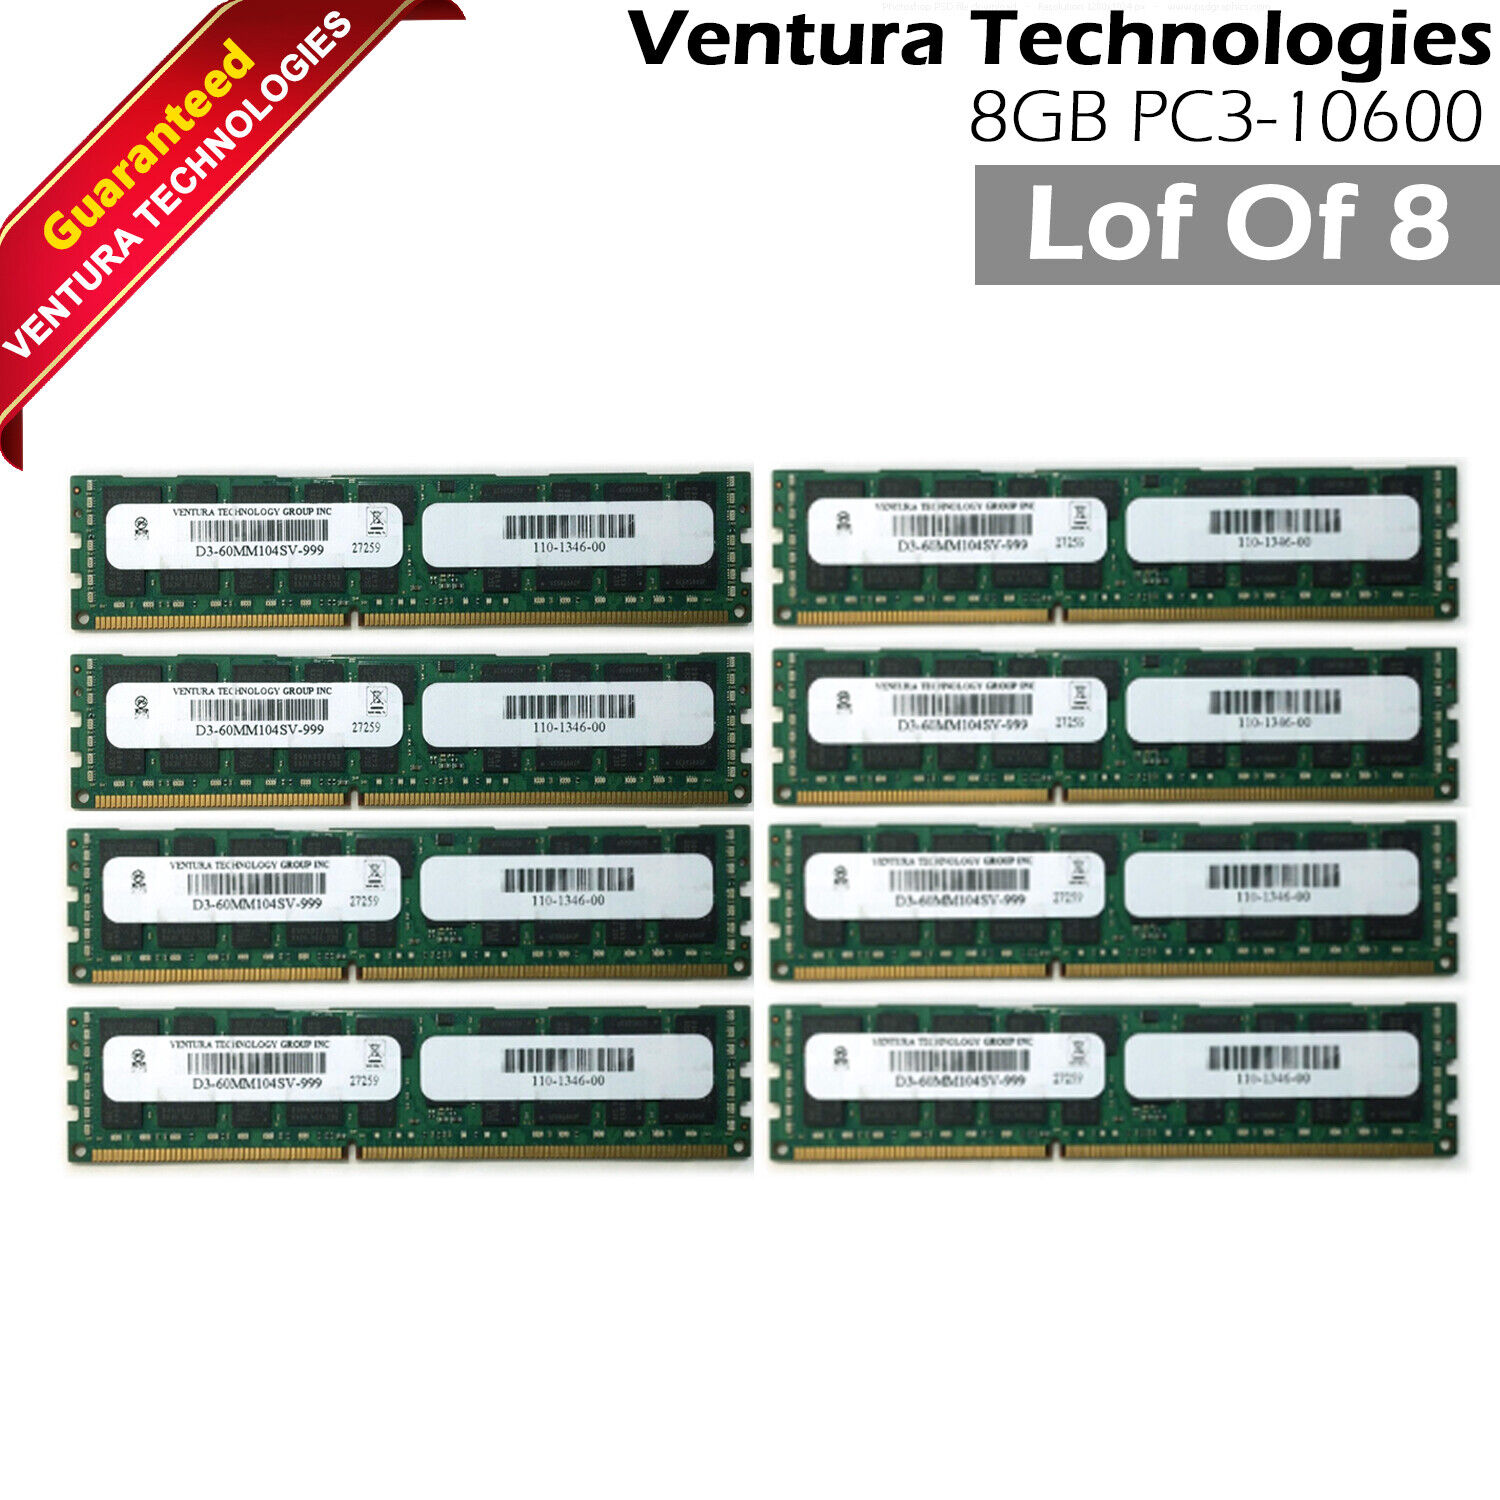 Lot 8 Ventura D3-60MM104SV-999 8x8GB PC3-10600 DDR3-1333 2Rx4 1.5V Memory Module